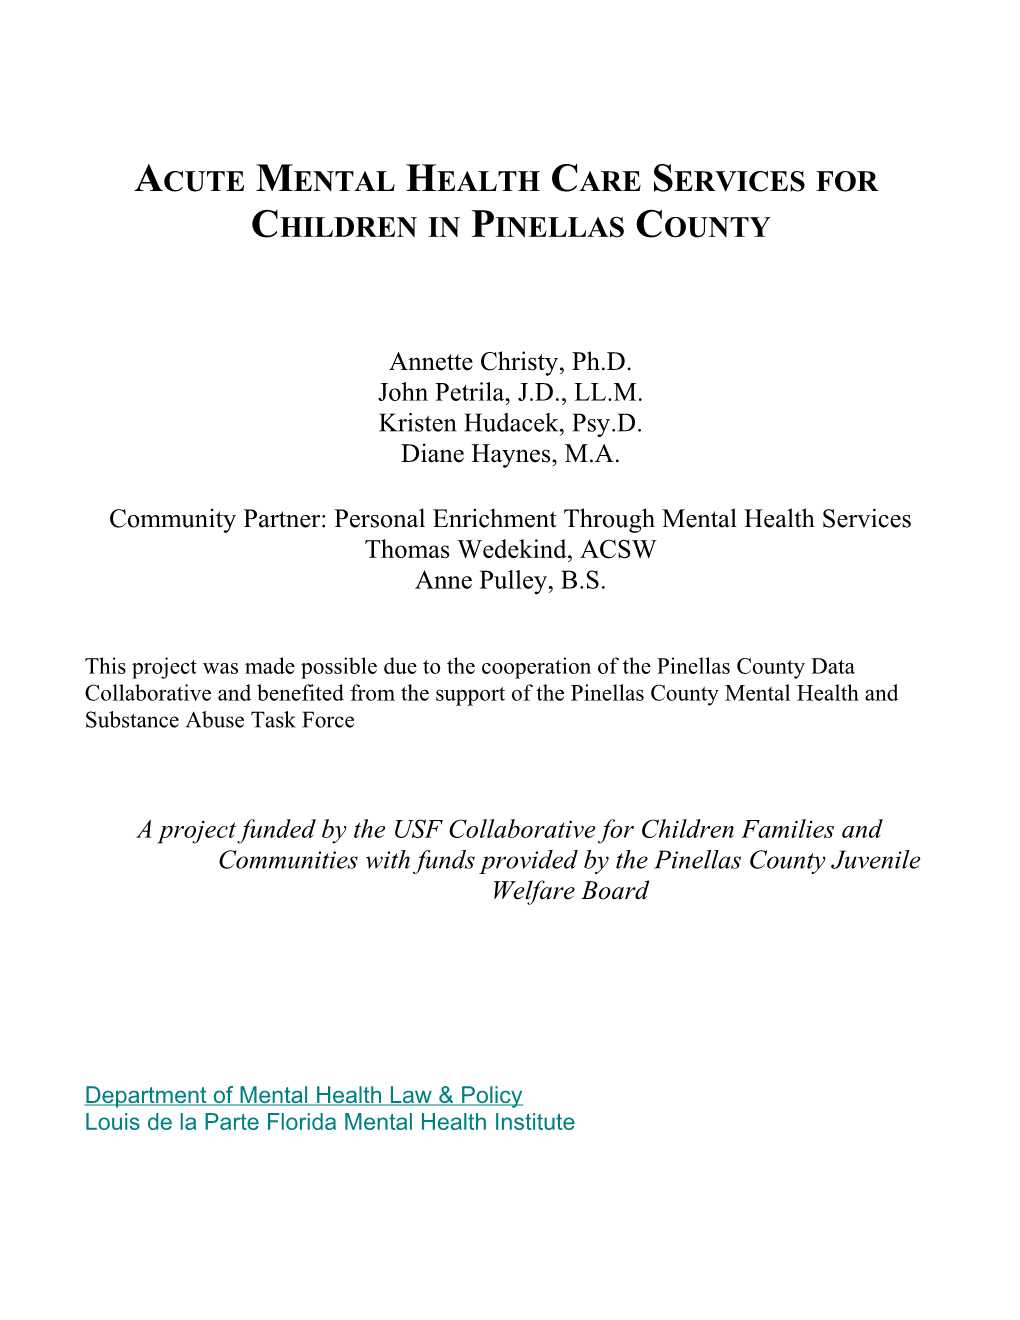 Children and Adolsecent Psychiatric Program (CAPP)